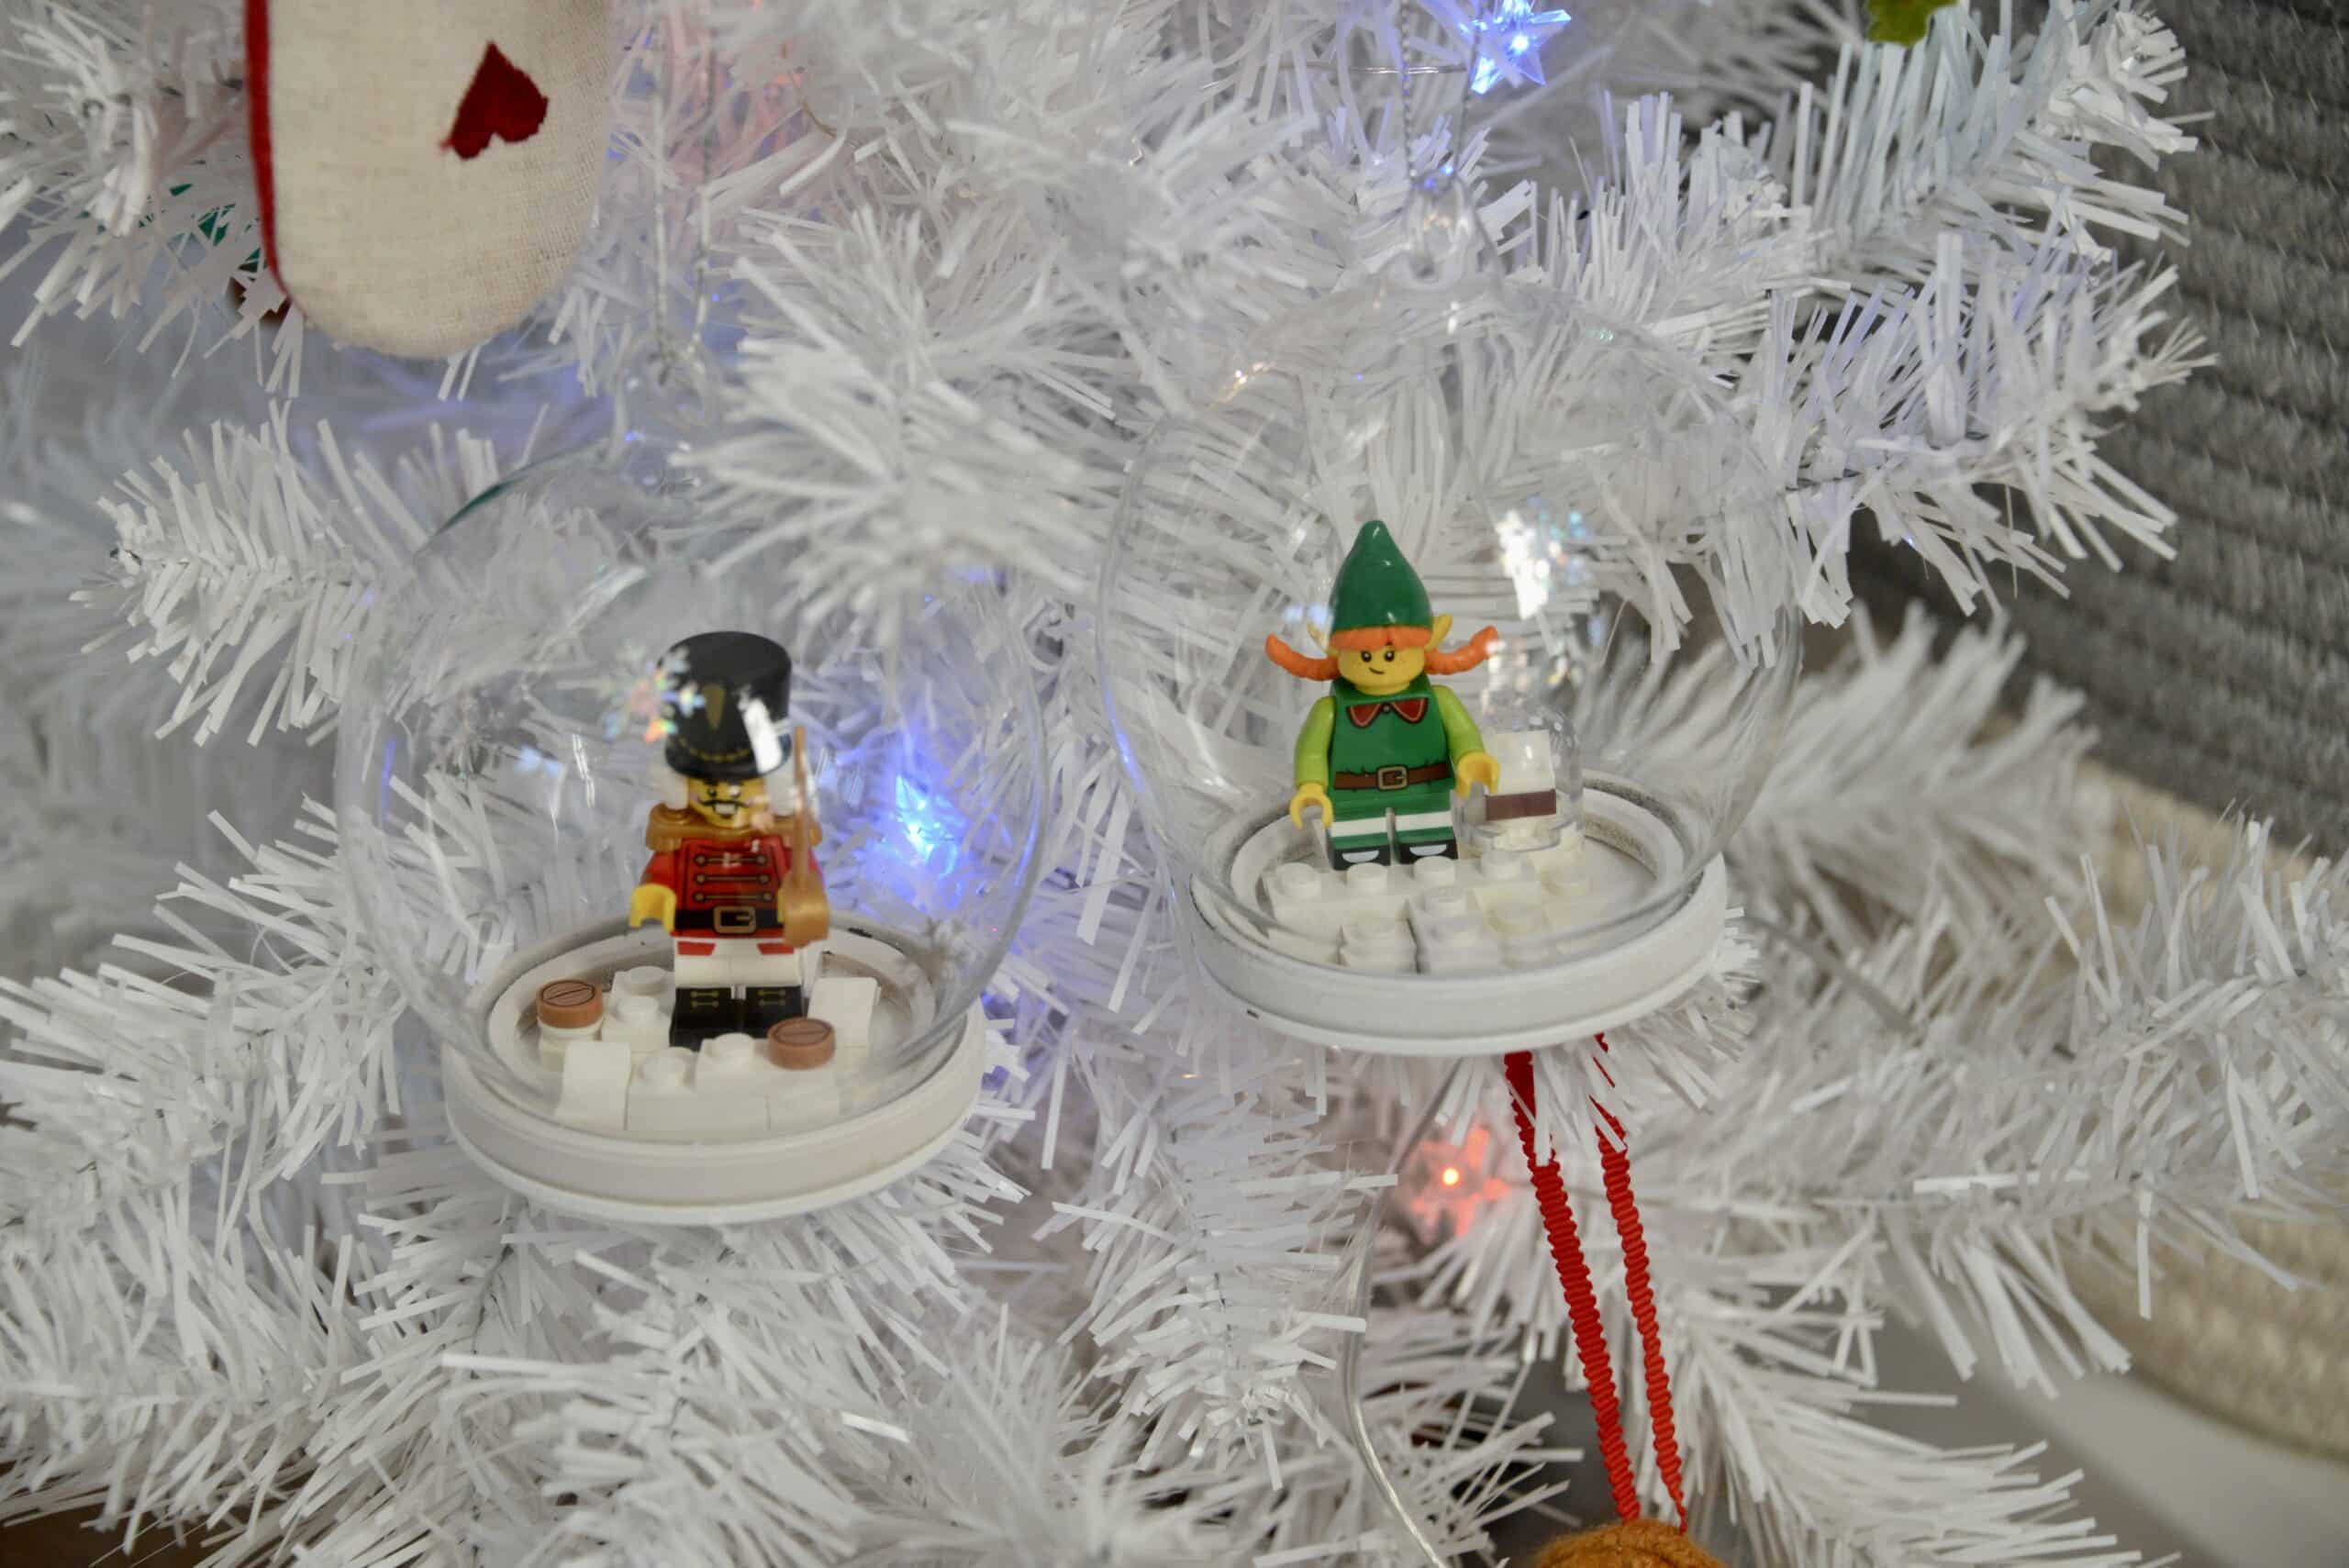 Homemade LEGO Christmas decorations for a tree. Nutcracker and elf mini figure inside a refillable snow globe tree decoration